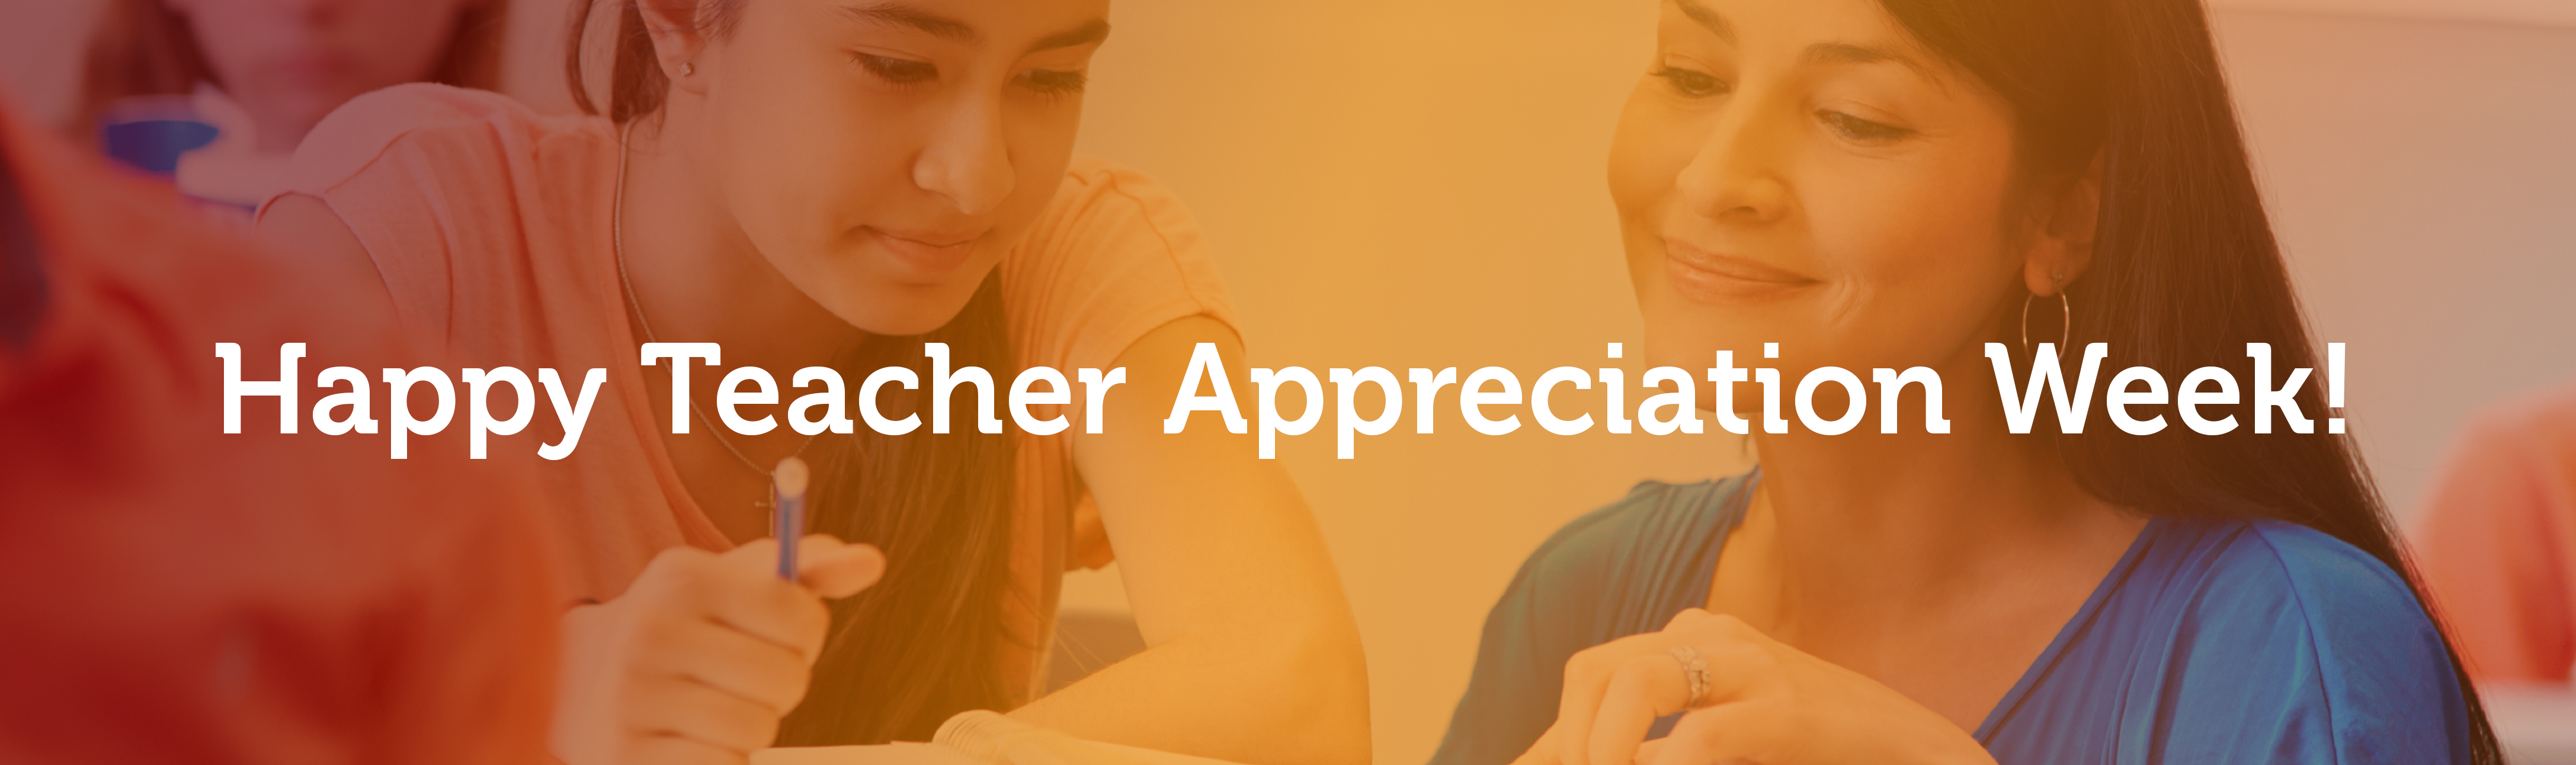 Teachers Appreciation Week 